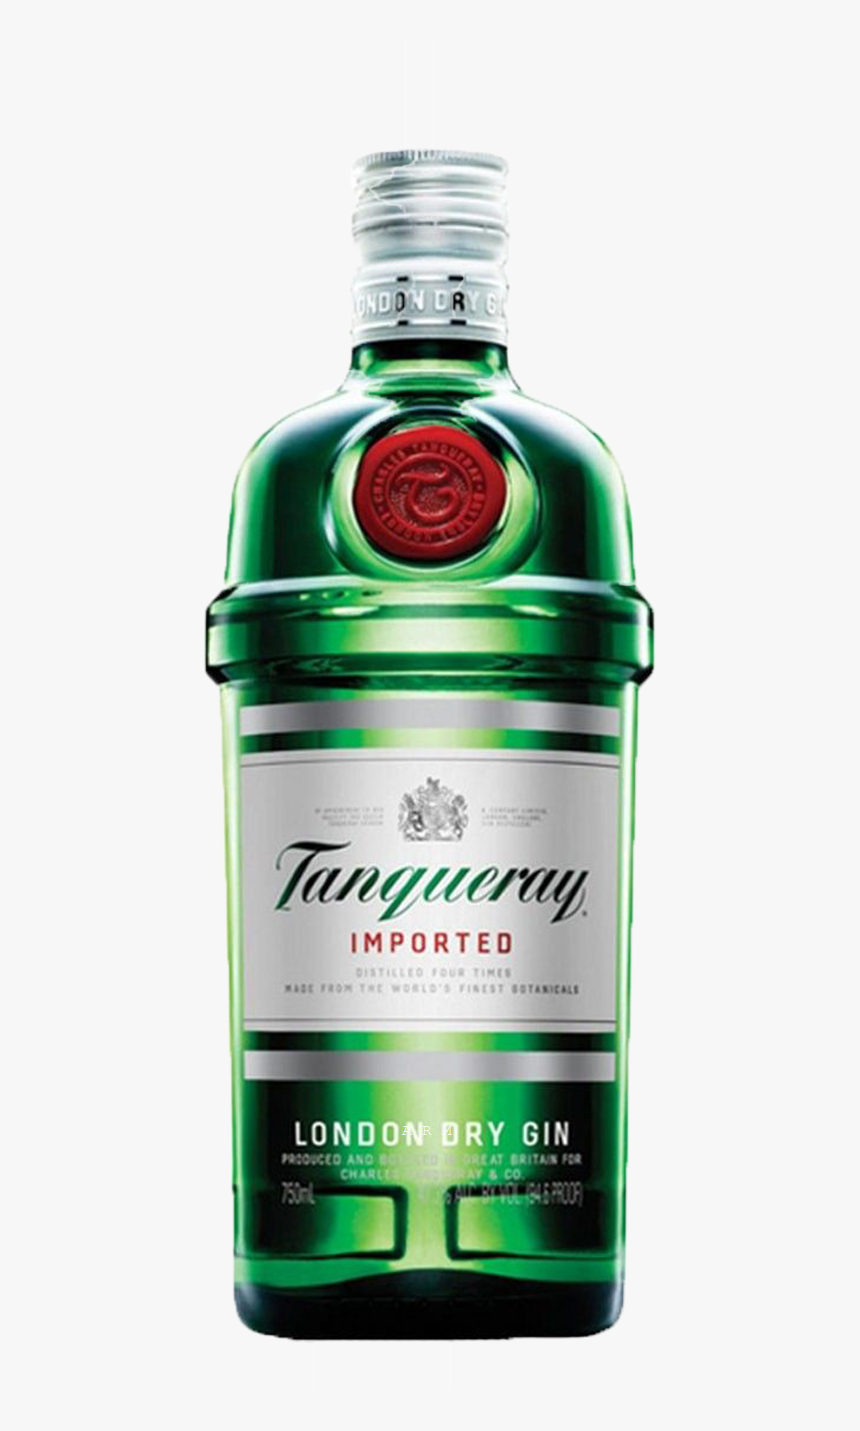 Tanqueray London Dry Gin. Джин Tanqueray ТЭН. Джин London Dry Gin. Джин танкерей